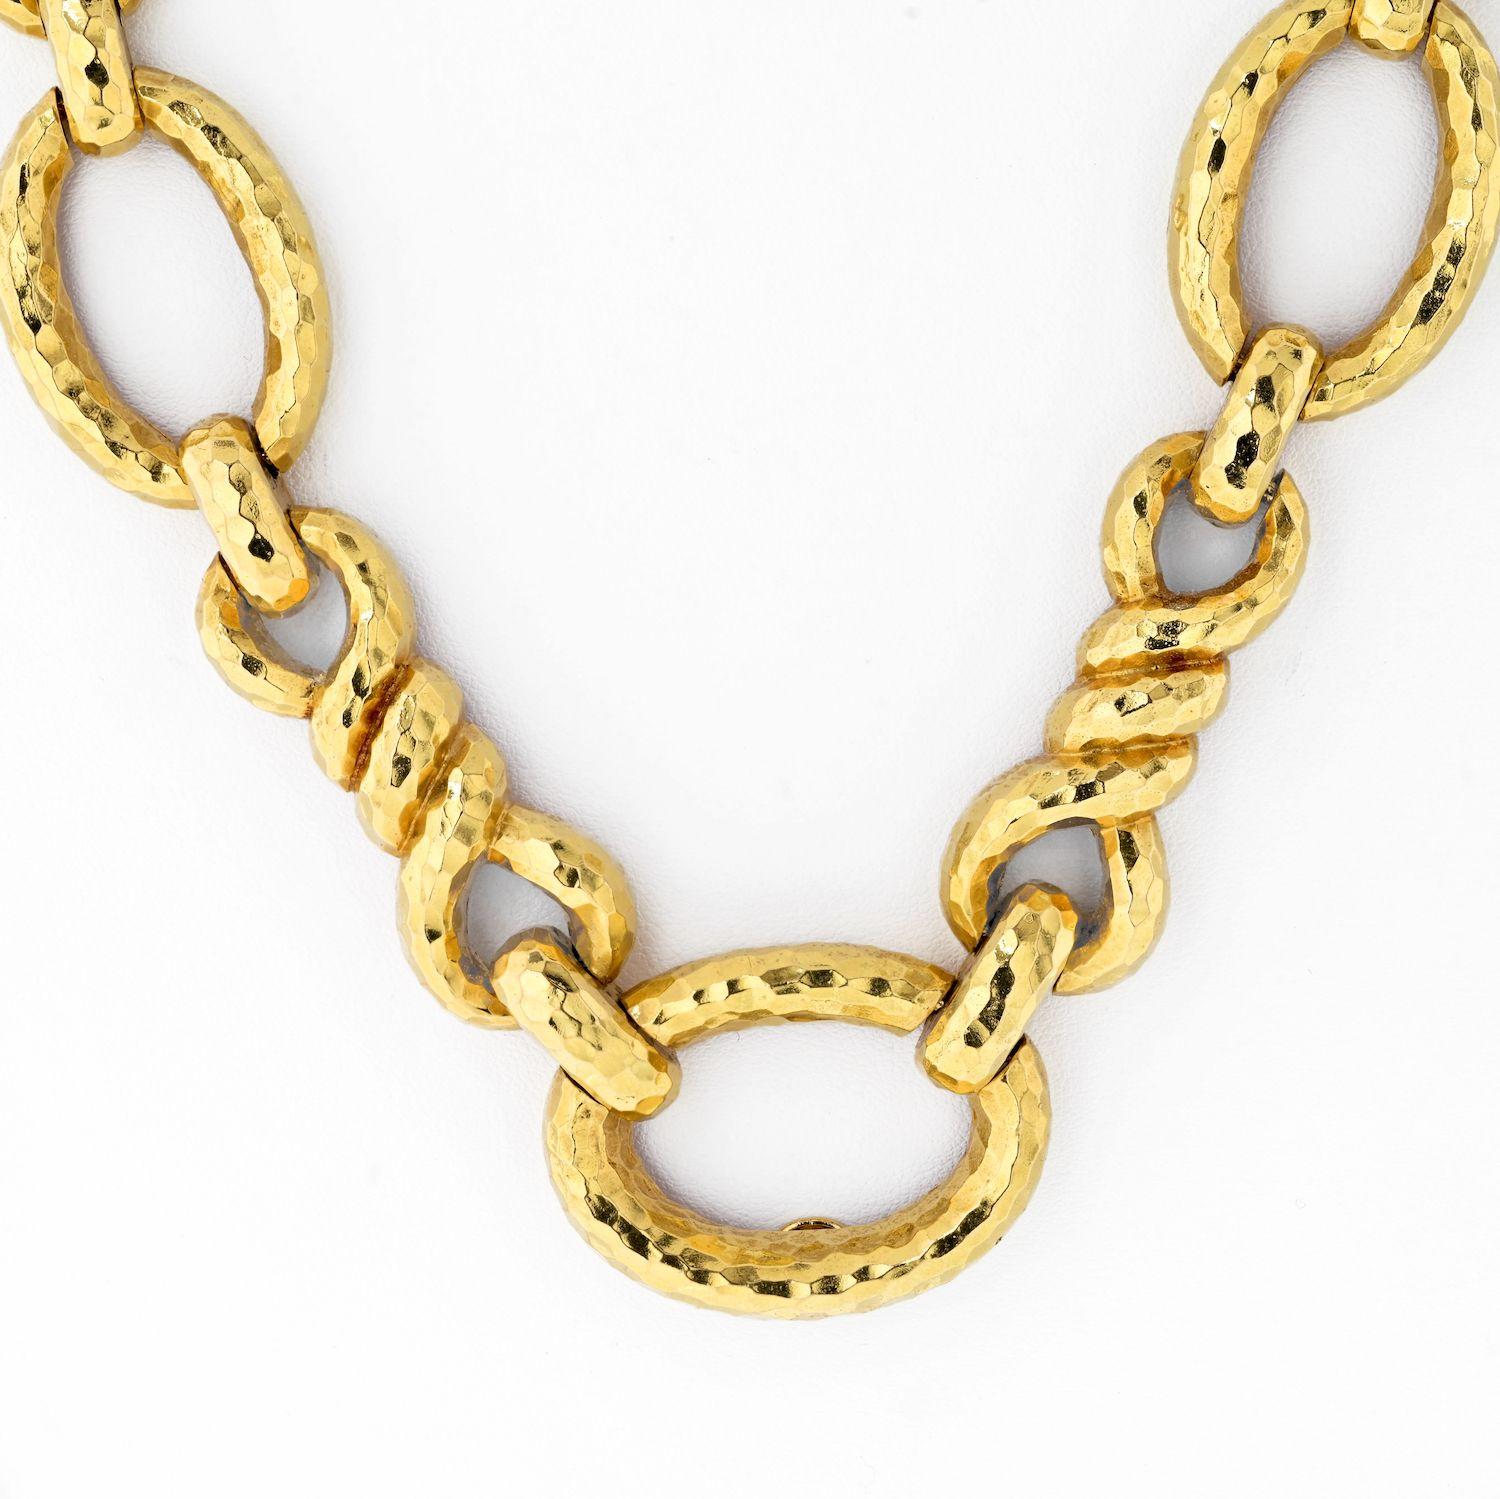 28 inch 18k gold chain